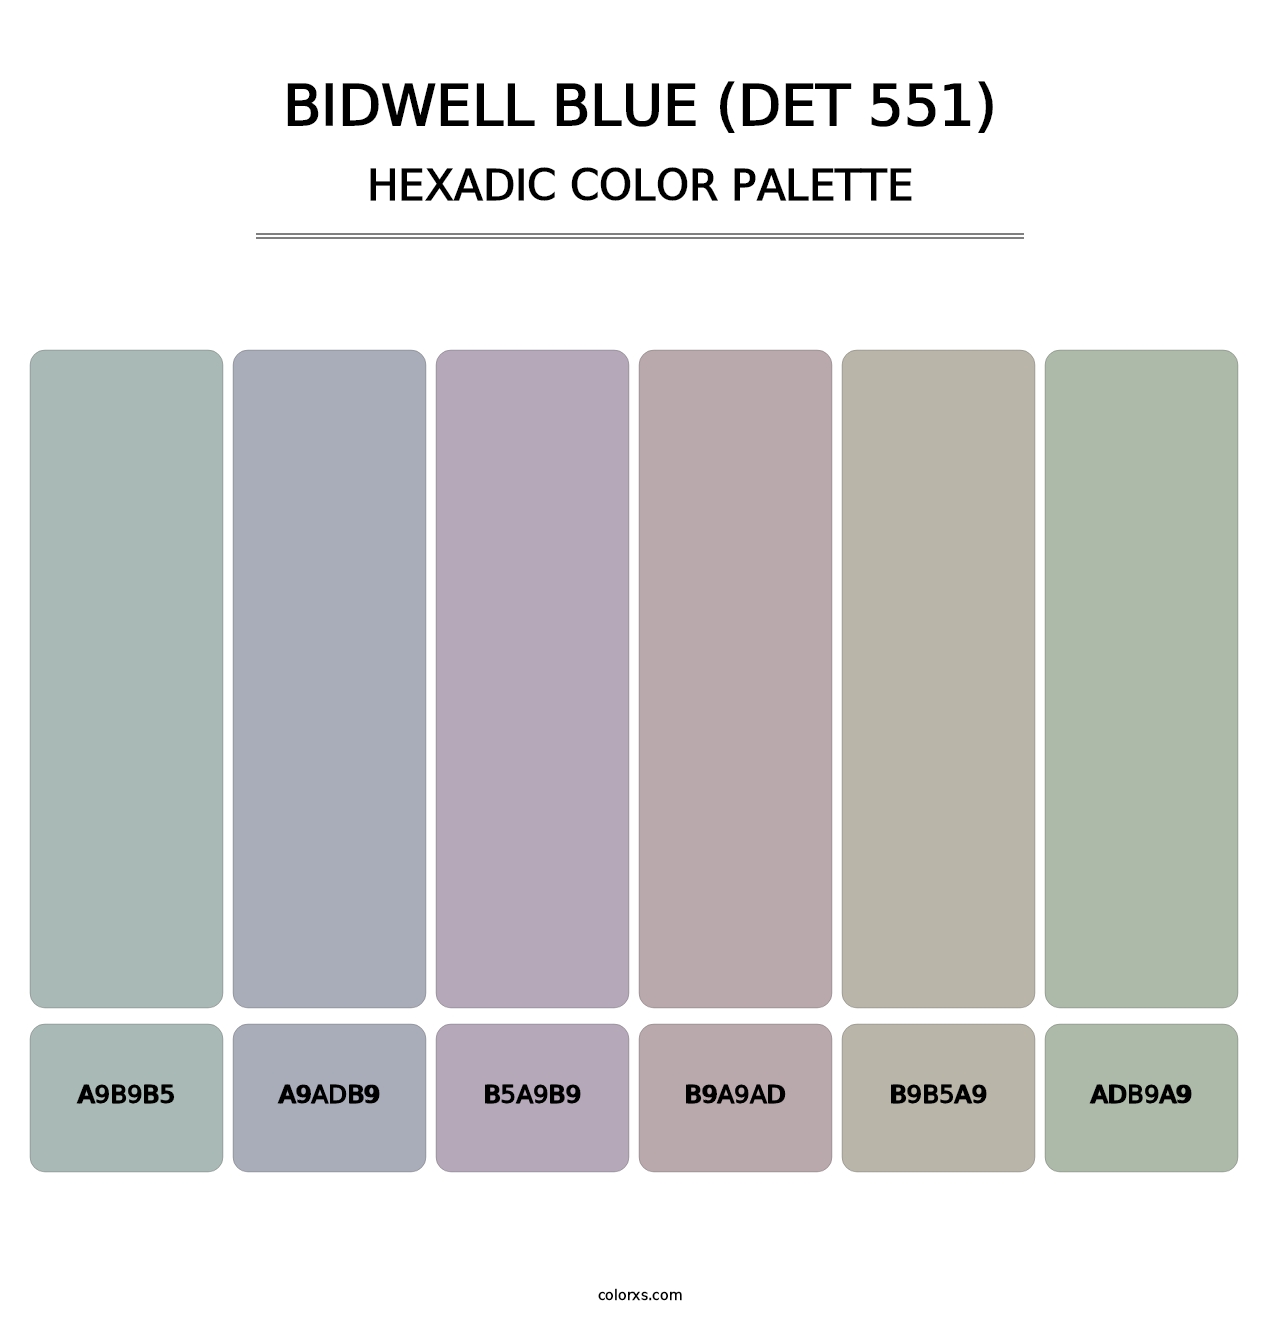 Bidwell Blue (DET 551) - Hexadic Color Palette